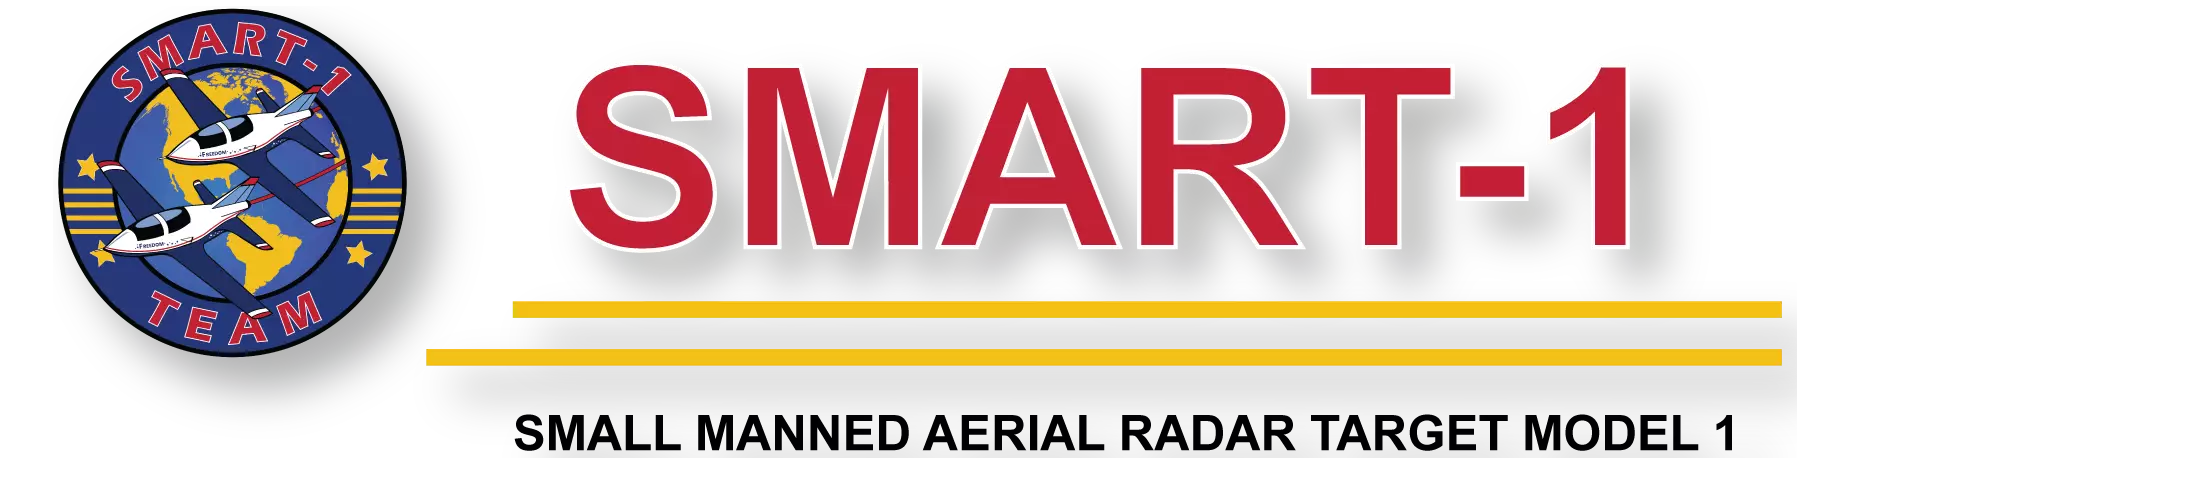 Smart-1 logo